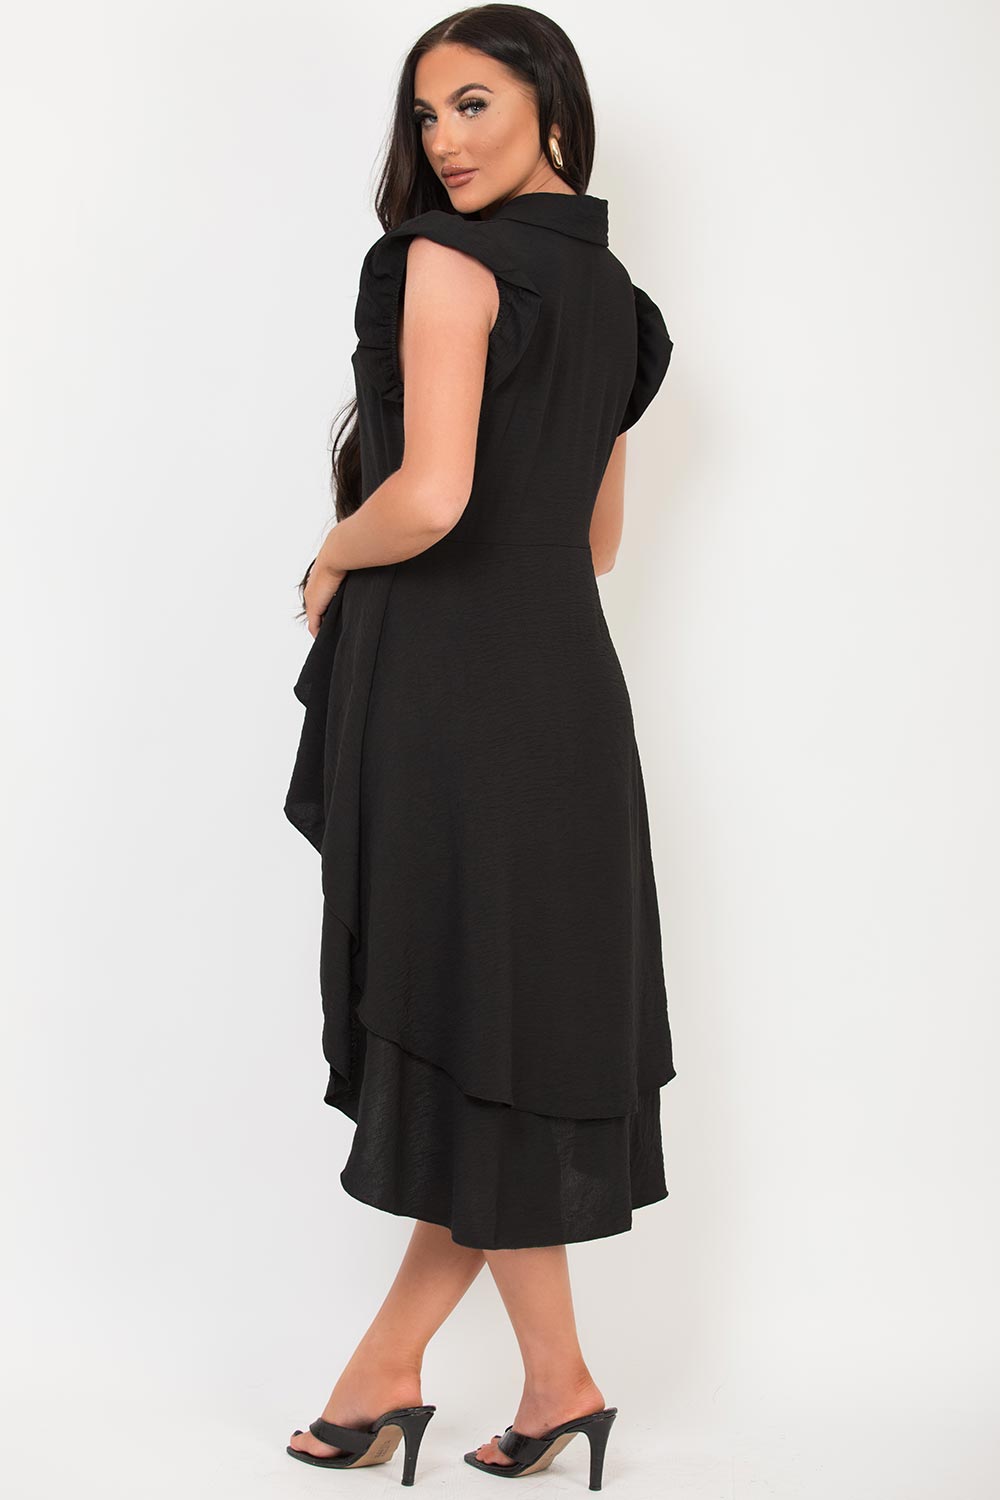 Black Long Sleeve Bodycon Dress With Diamante Detail